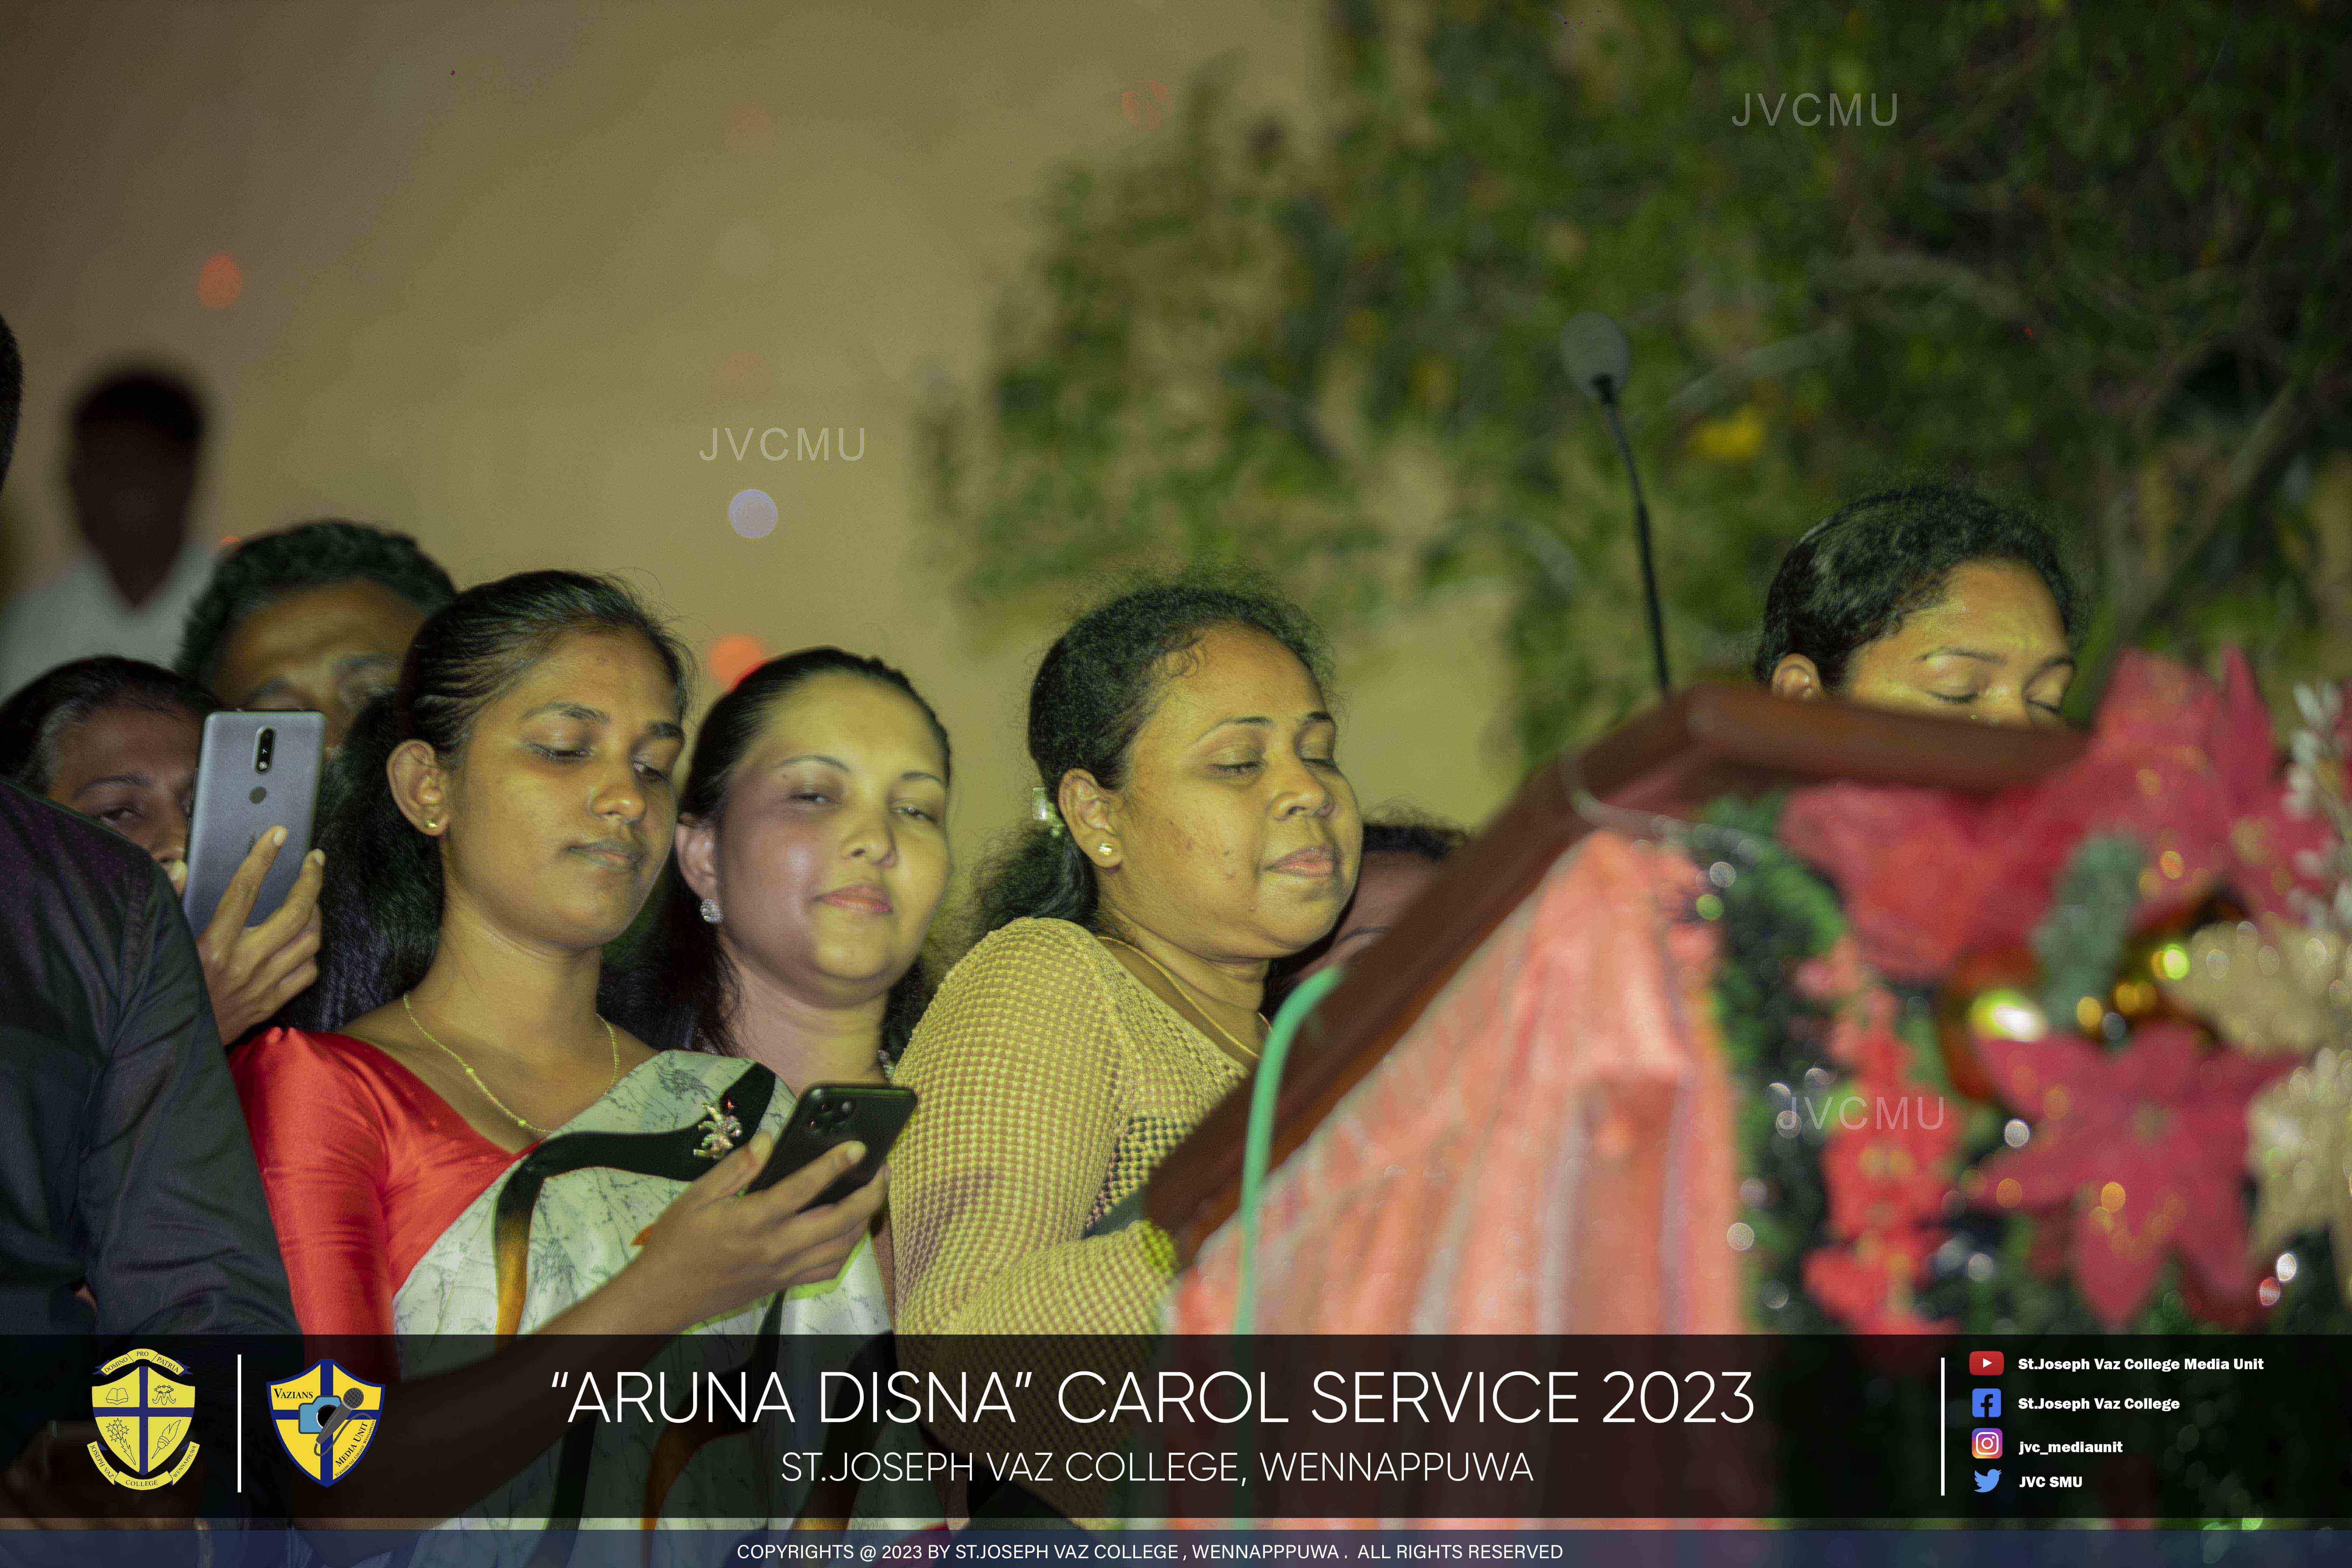 Aruna Disna Carol Service 2023 - St. Joseph Vaz College - Wennappuwa - Sri Lanka